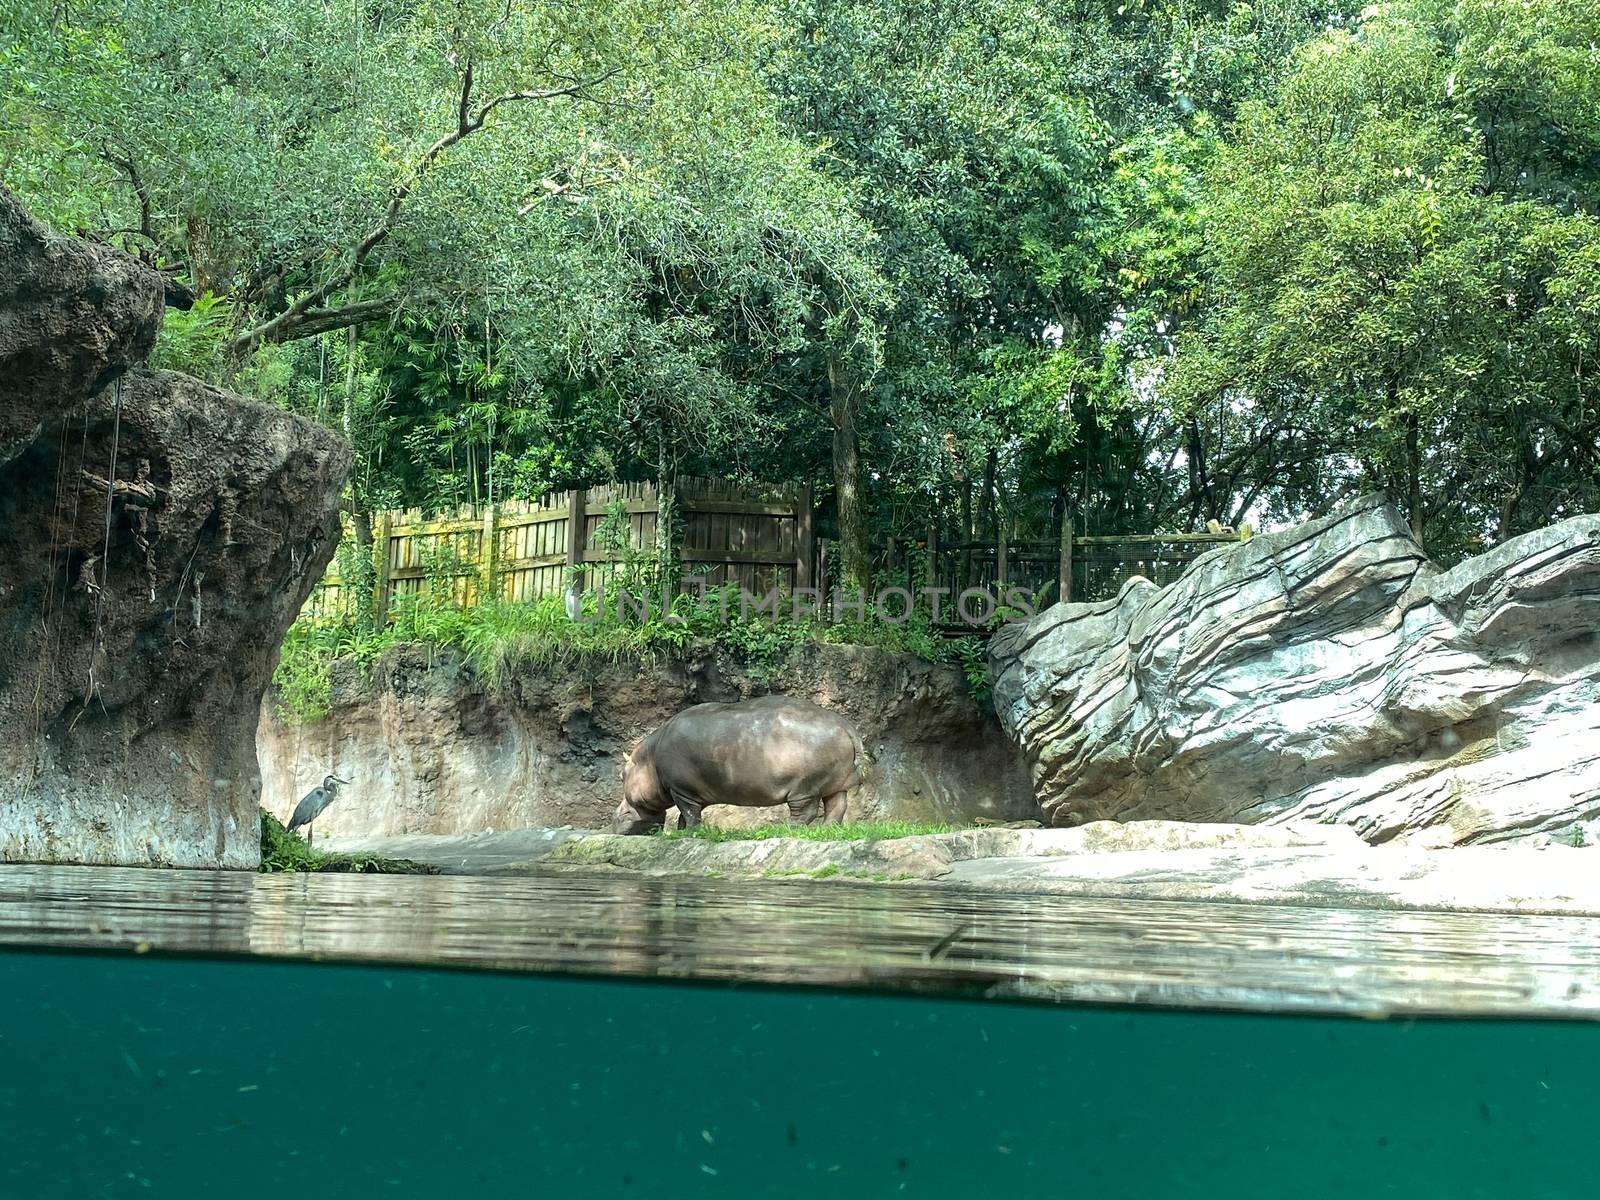 A Hippopotamus at a zoo near a pond by Jshanebutt